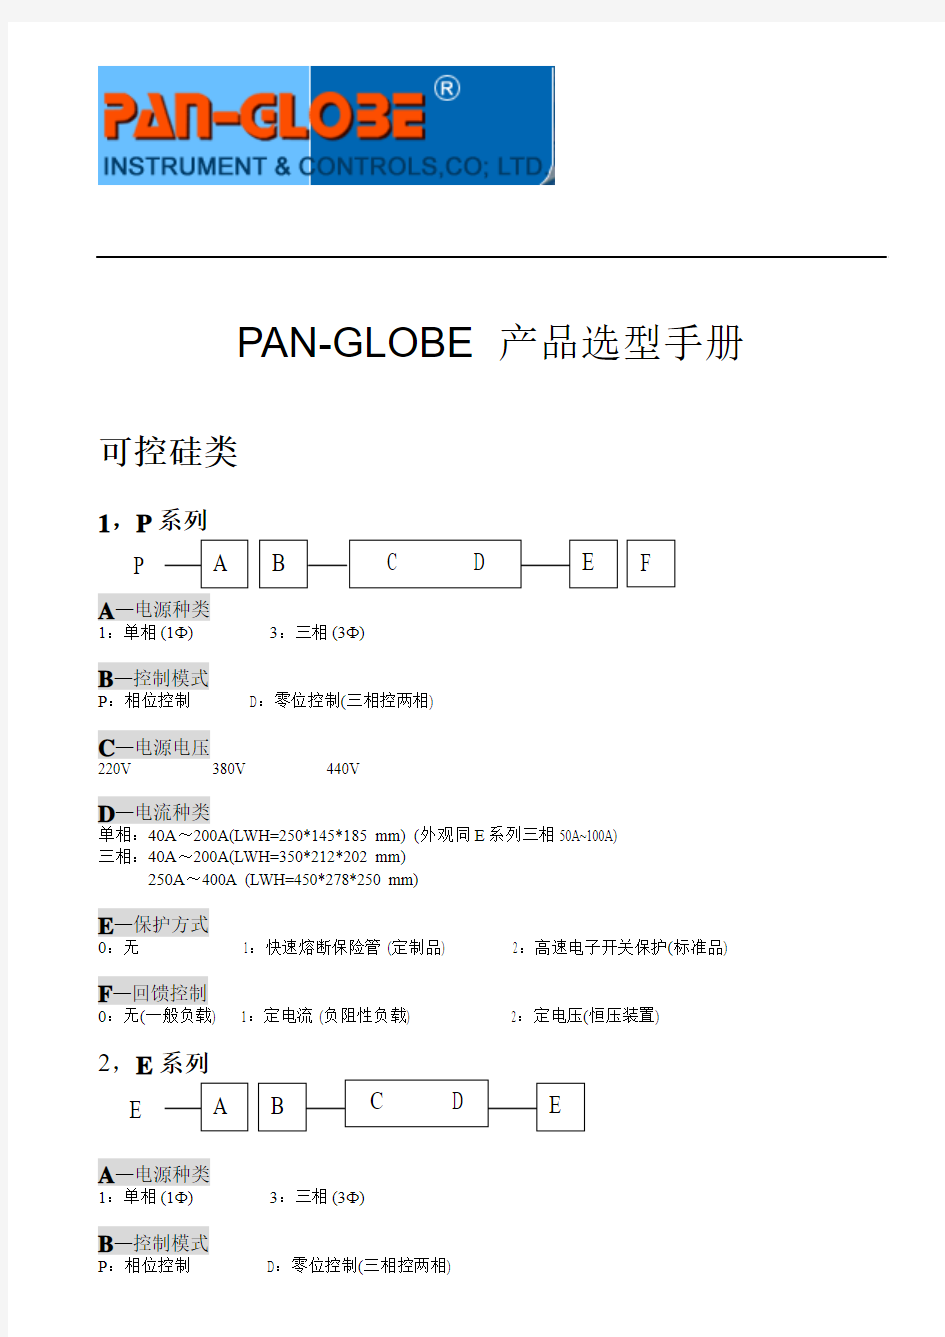 Pan-Globe泛达仪表选型手册